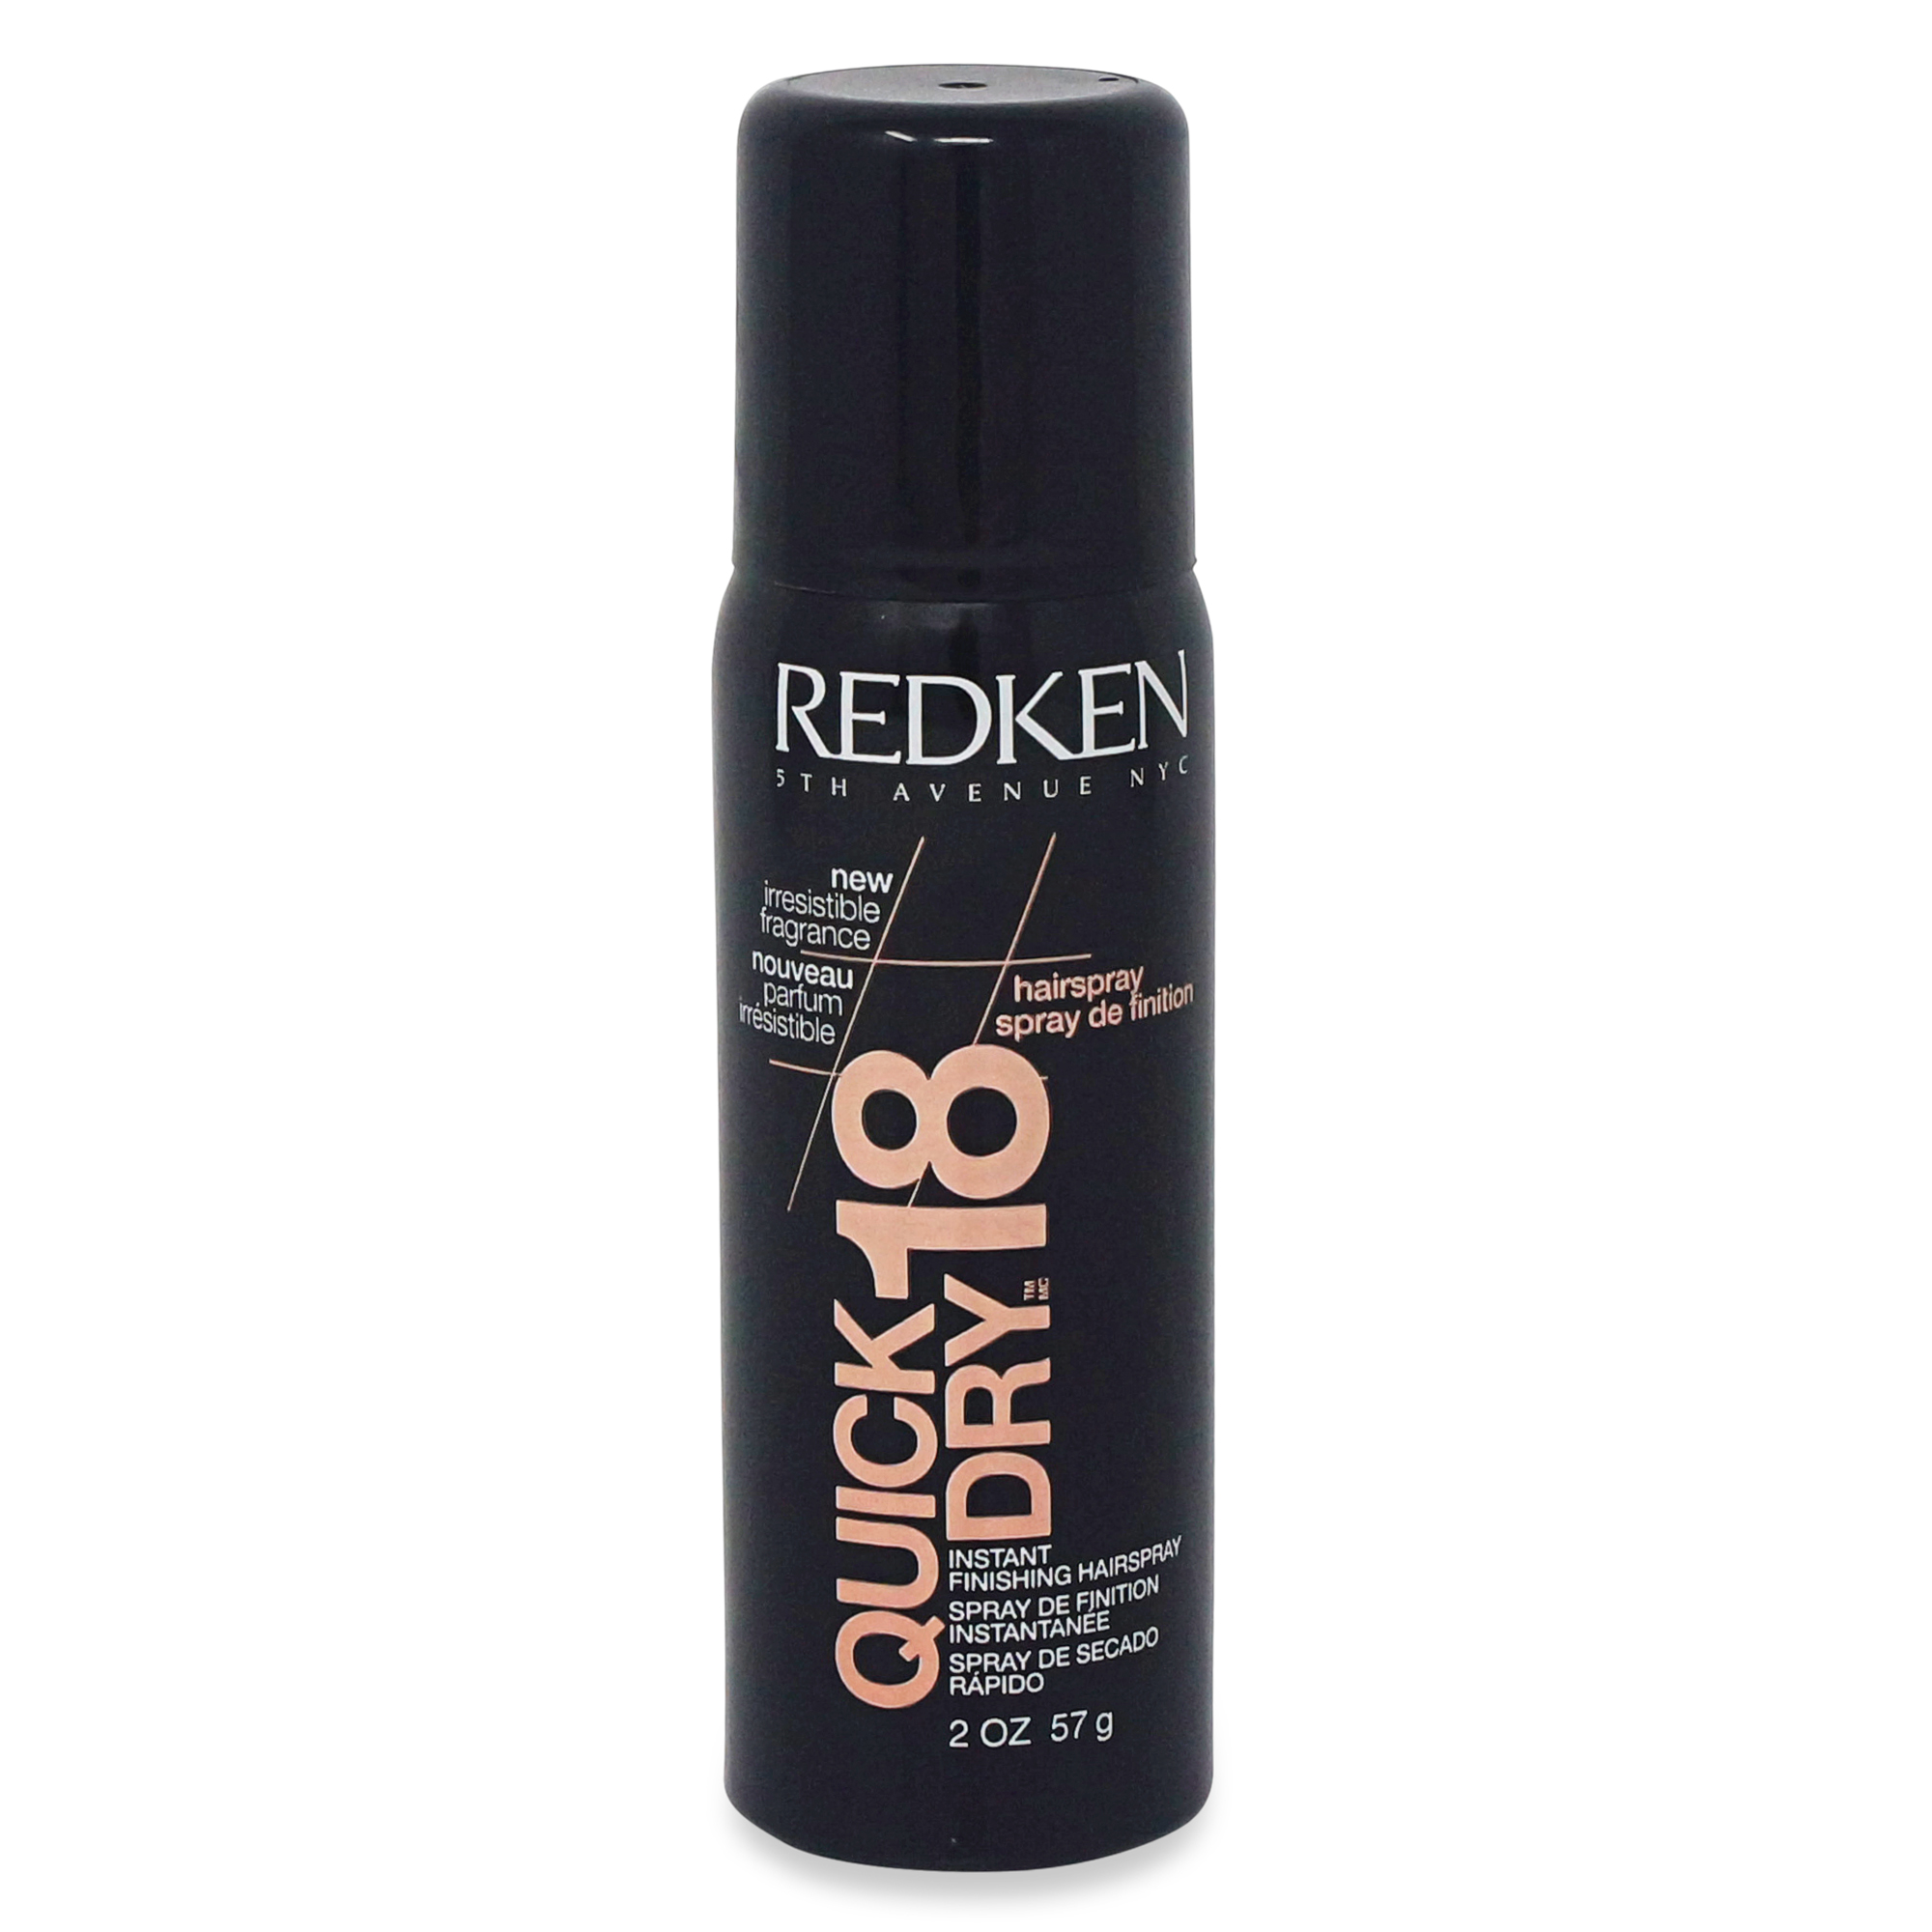 Redken Quick Dry #18 Hair Spray 2 oz - image 1 of 2